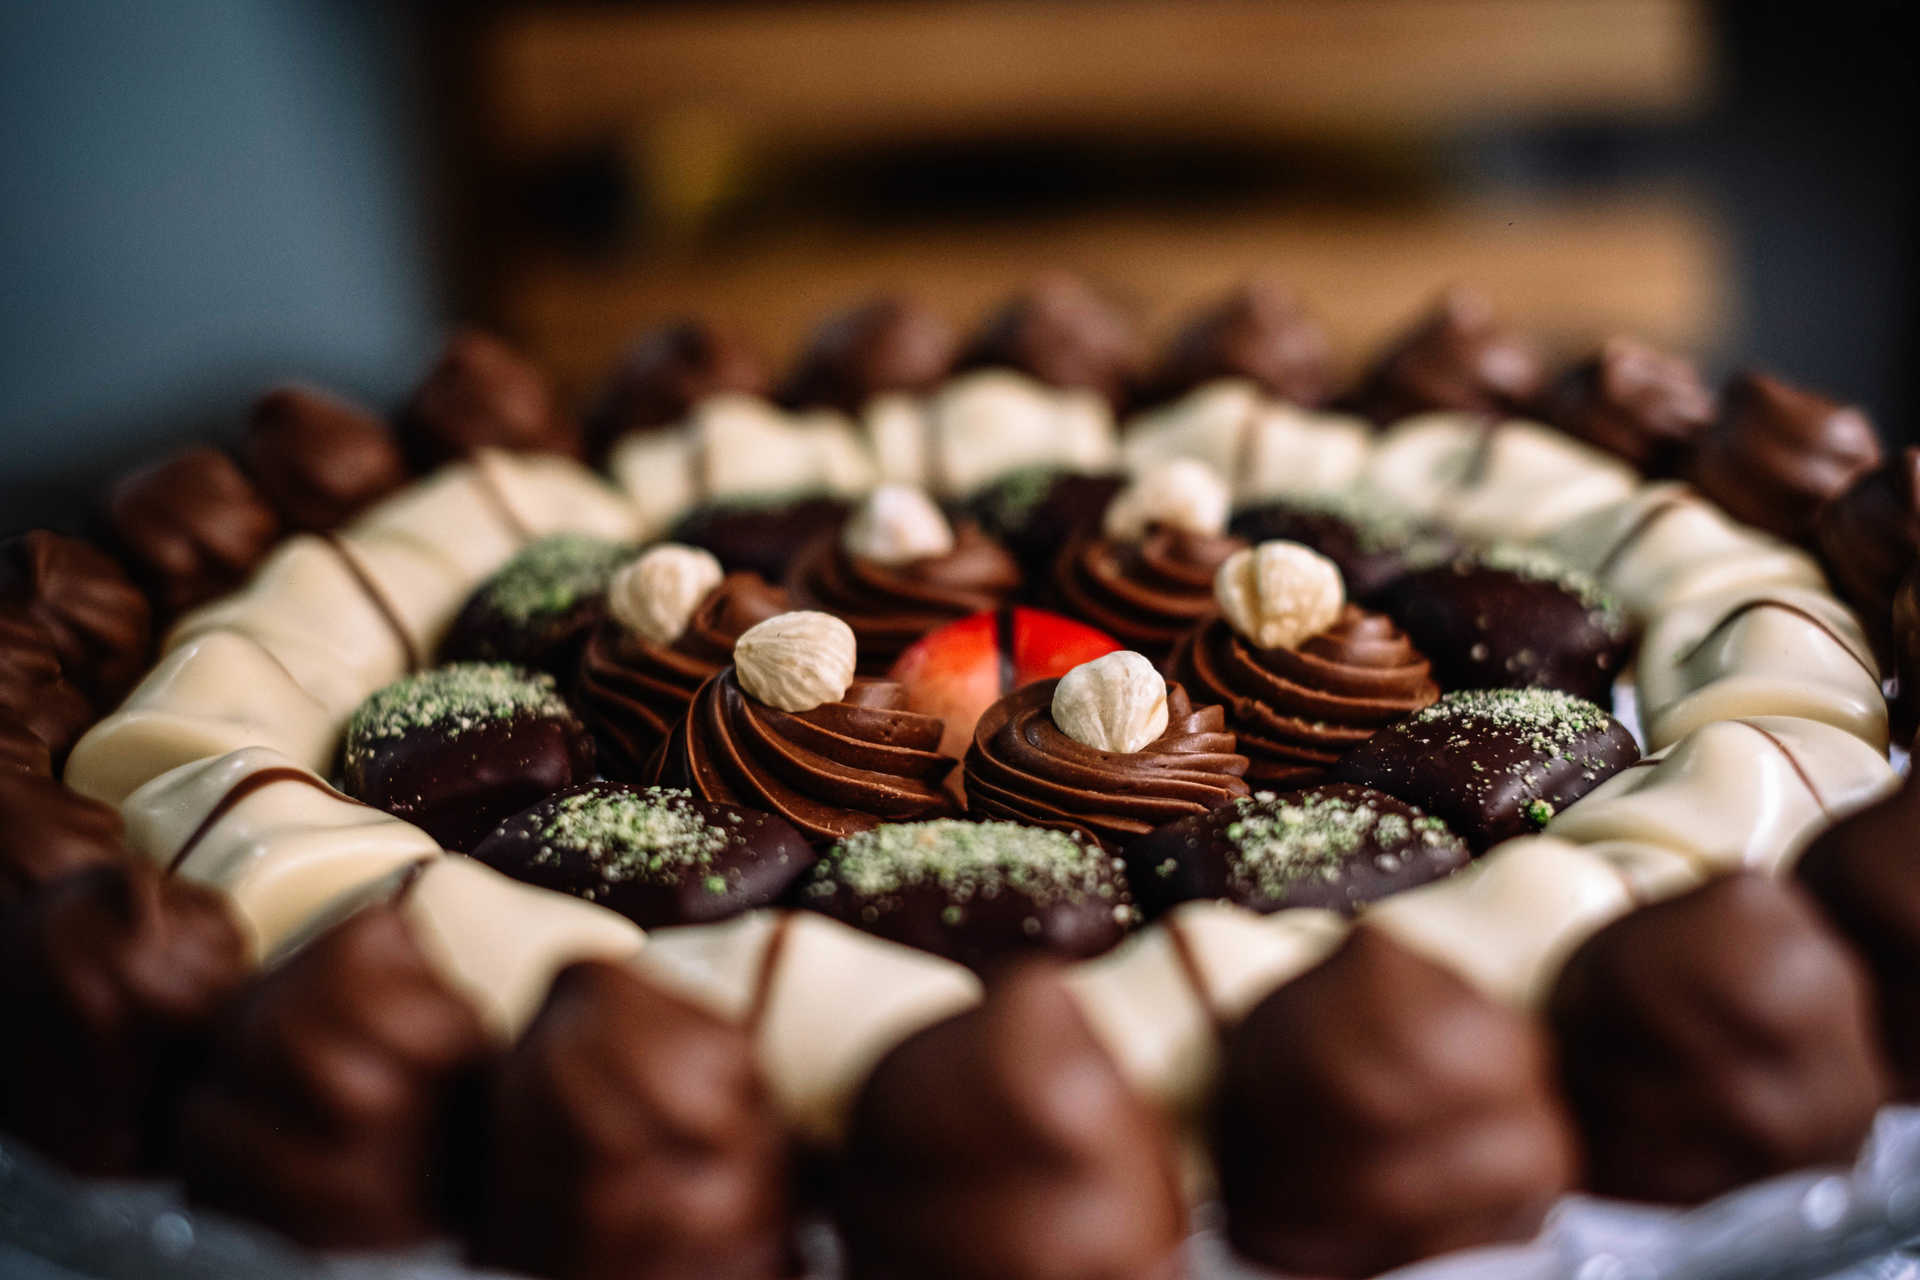 Chocolateria La Maison du Chocolat Belgue abre no Porto.